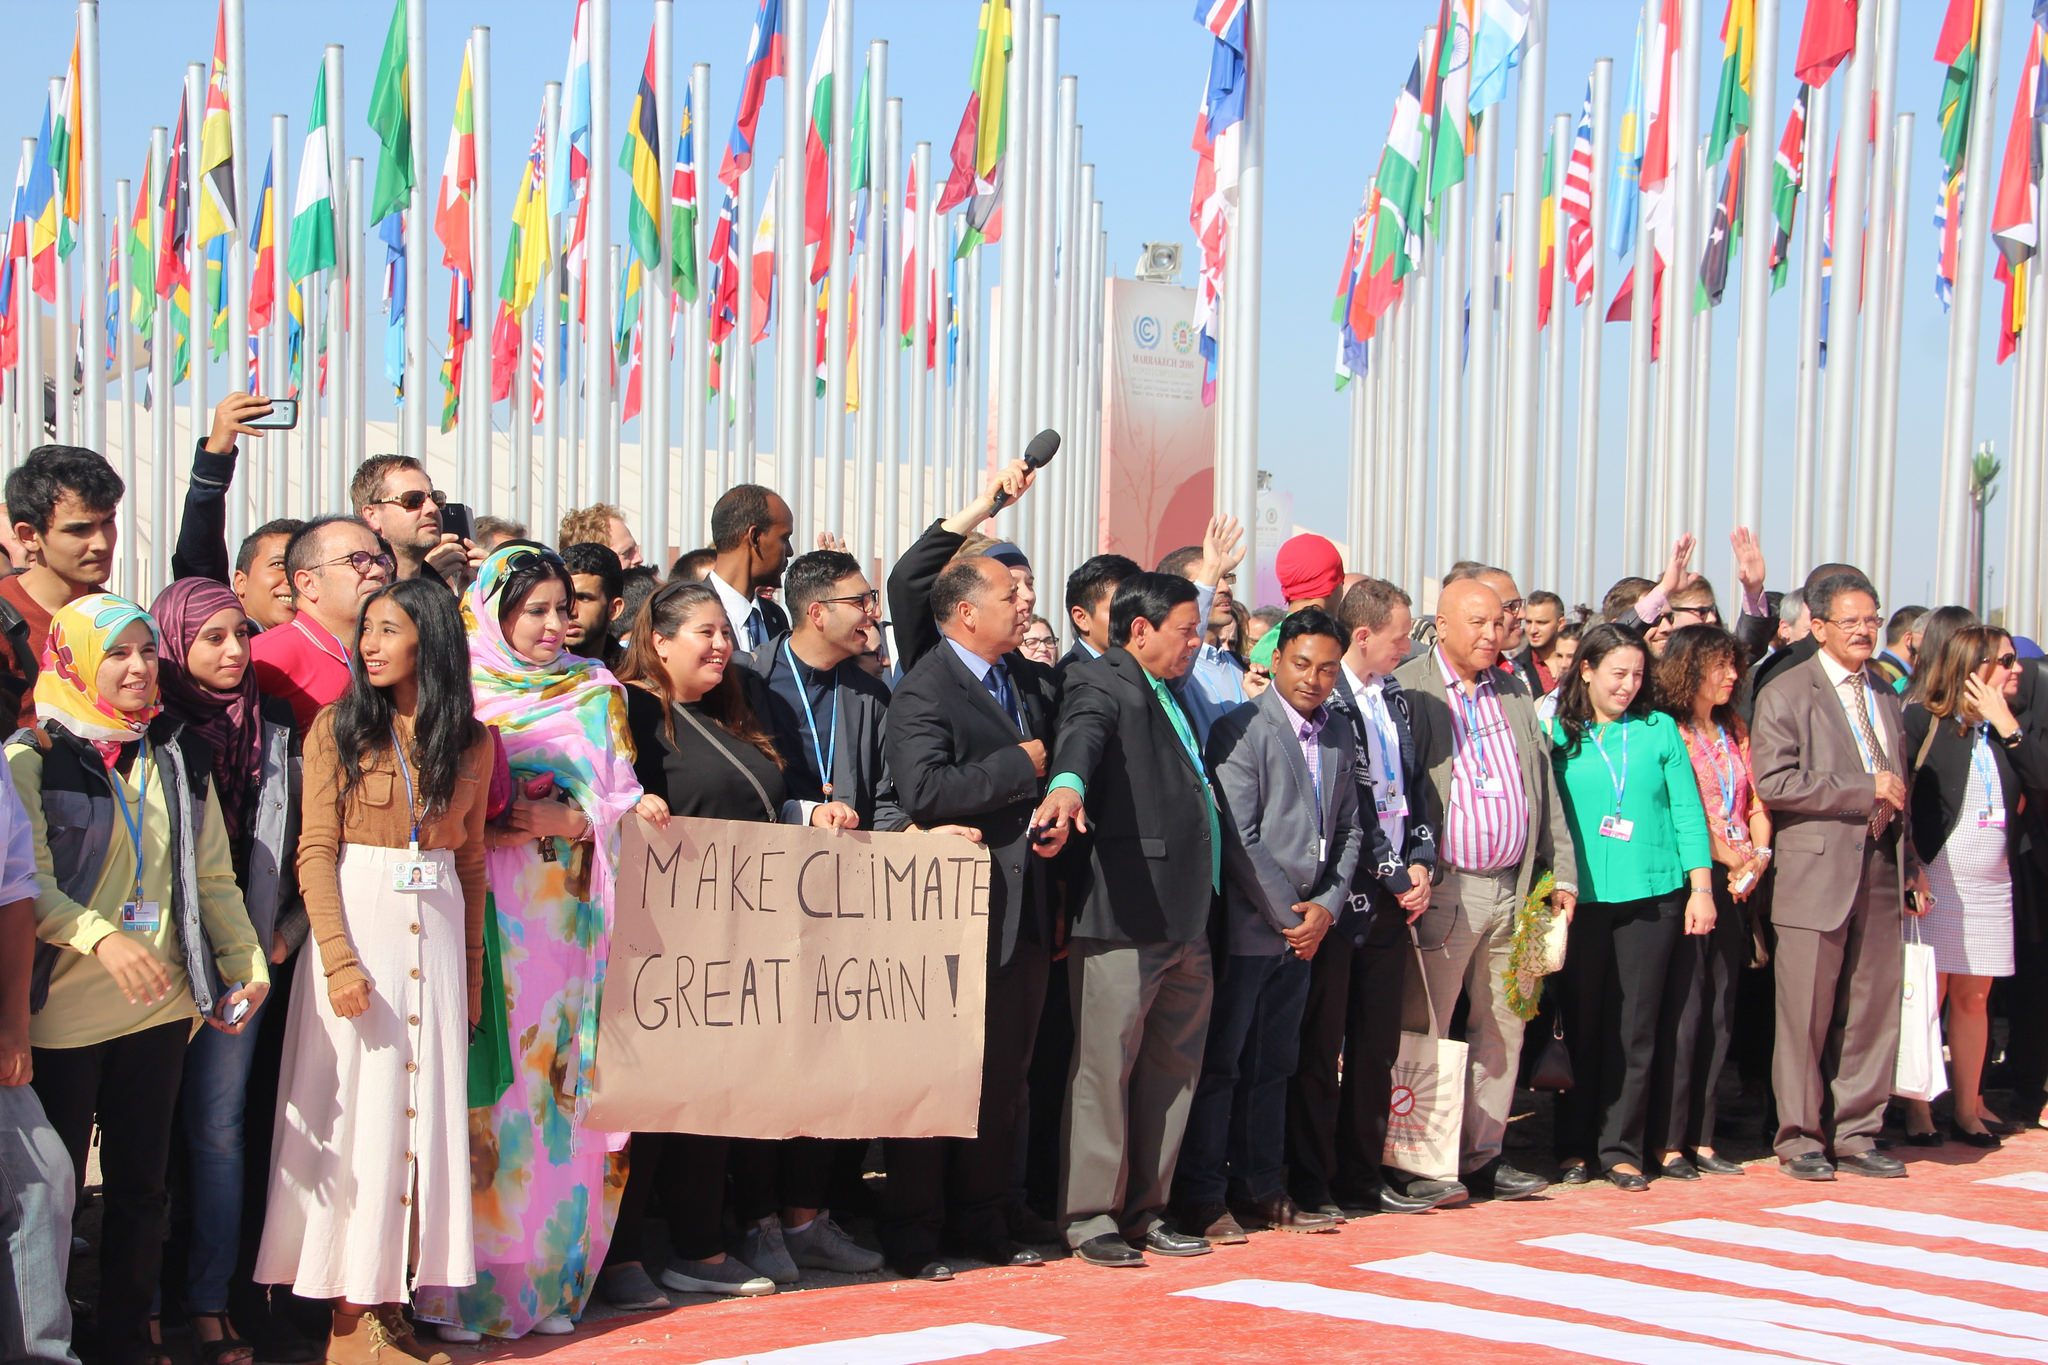 A UNFCCC photoshoot on November 18, 2016. Photo: Flickr / Takver